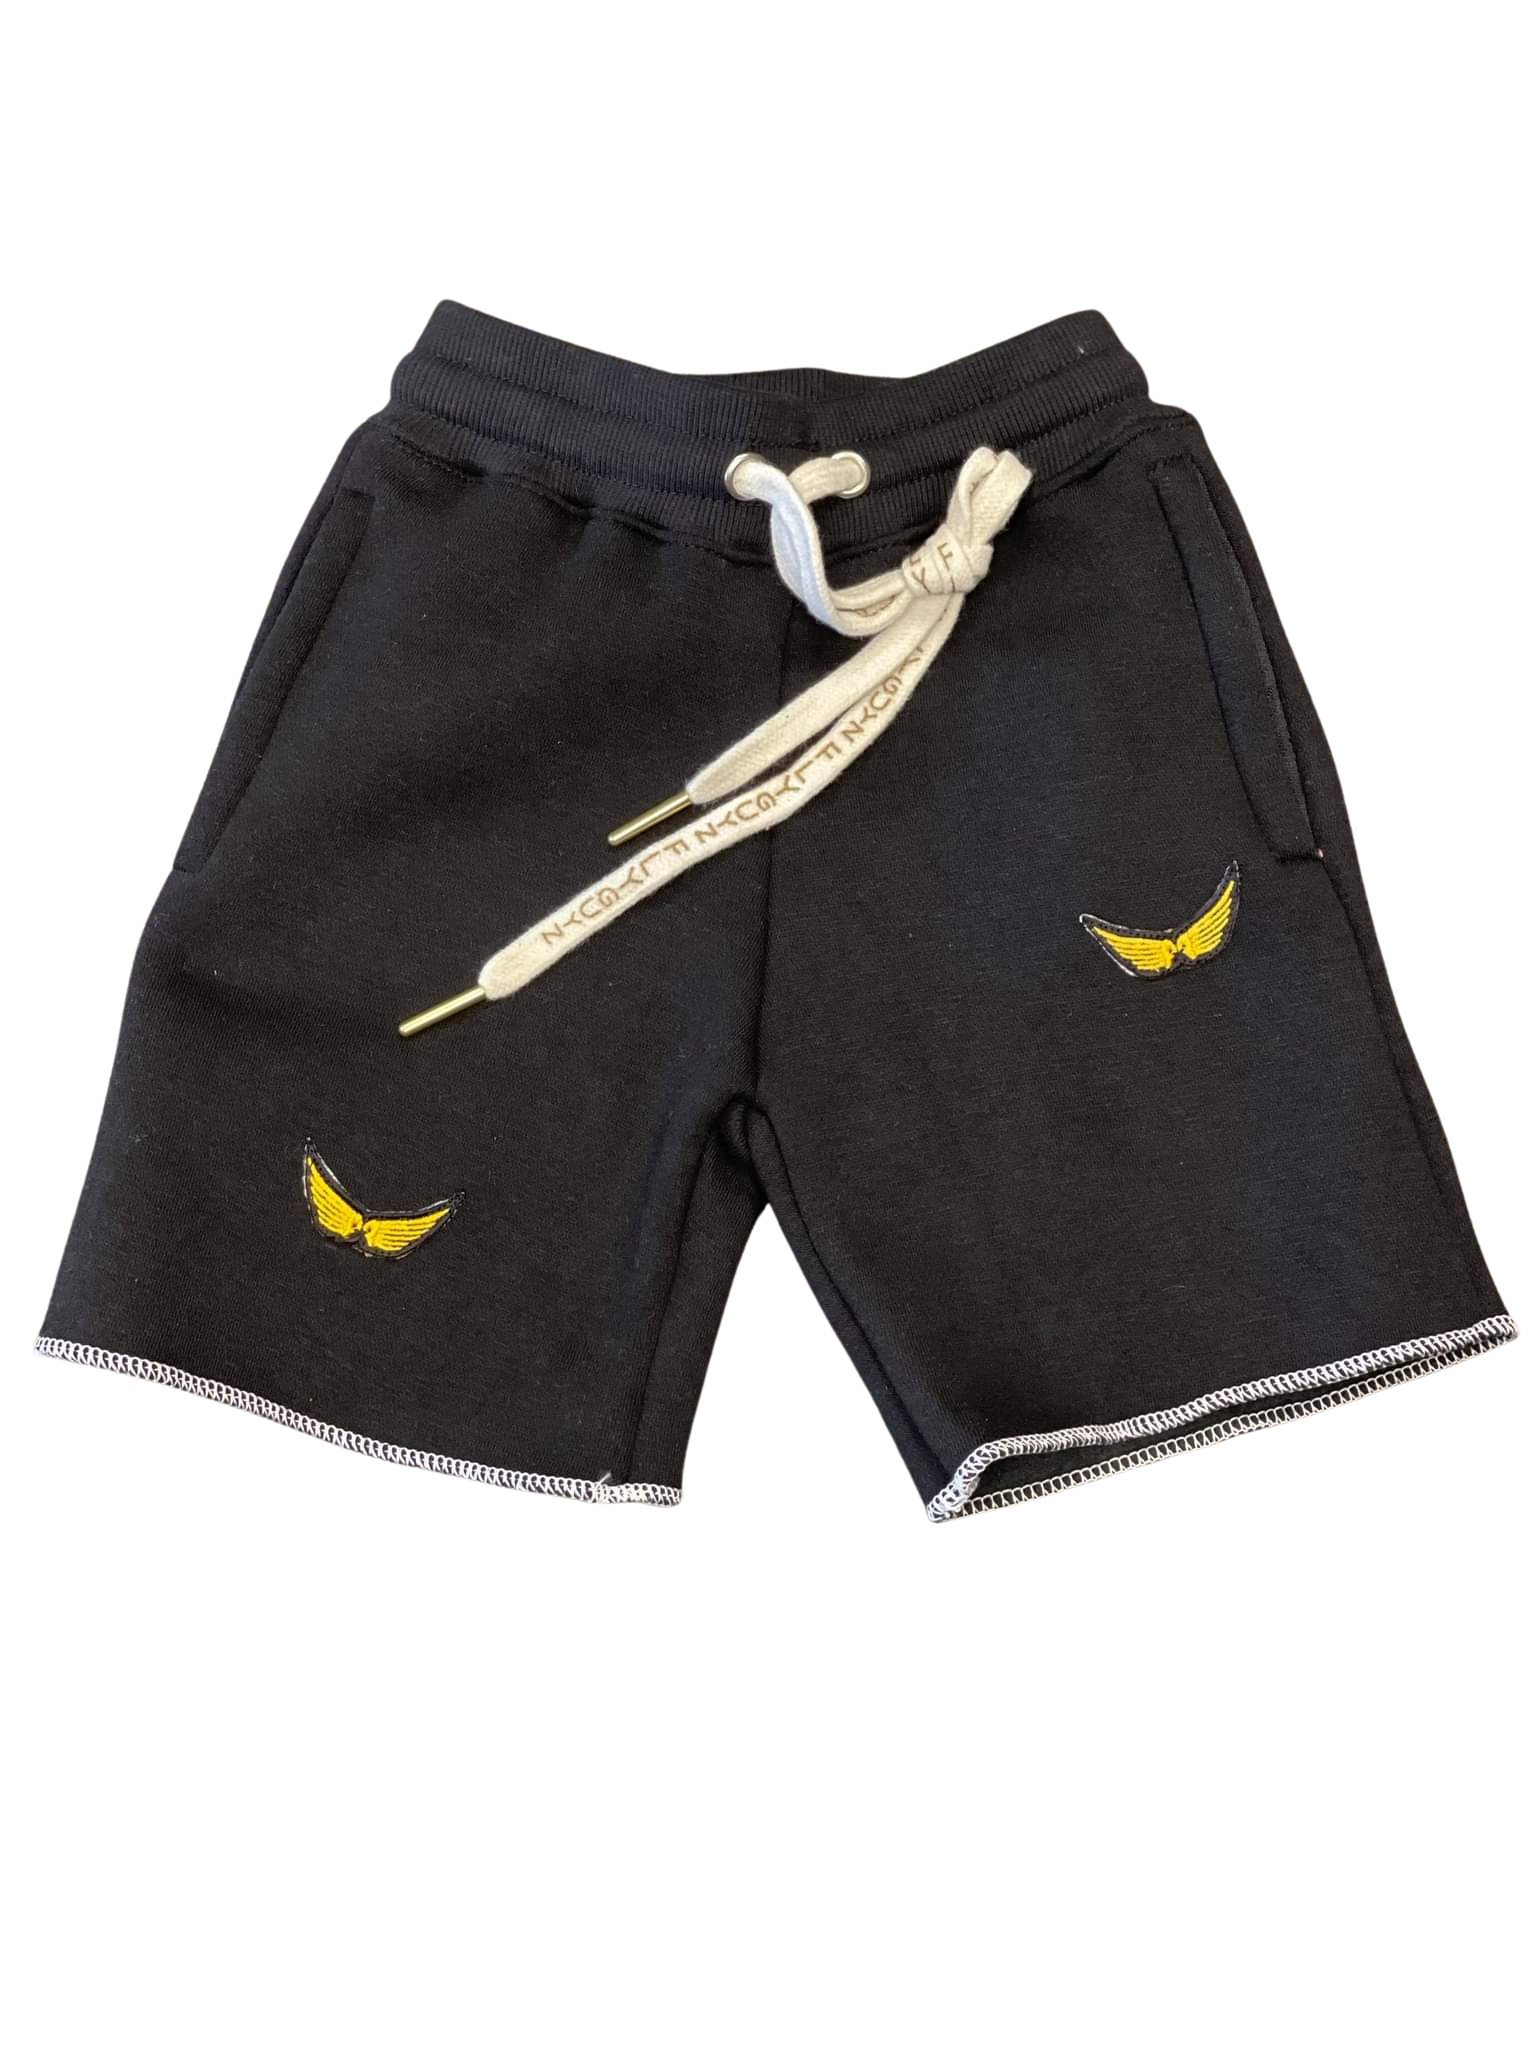 FGZ Patch Sweat Shorts (Boys) - FLY GUYZ